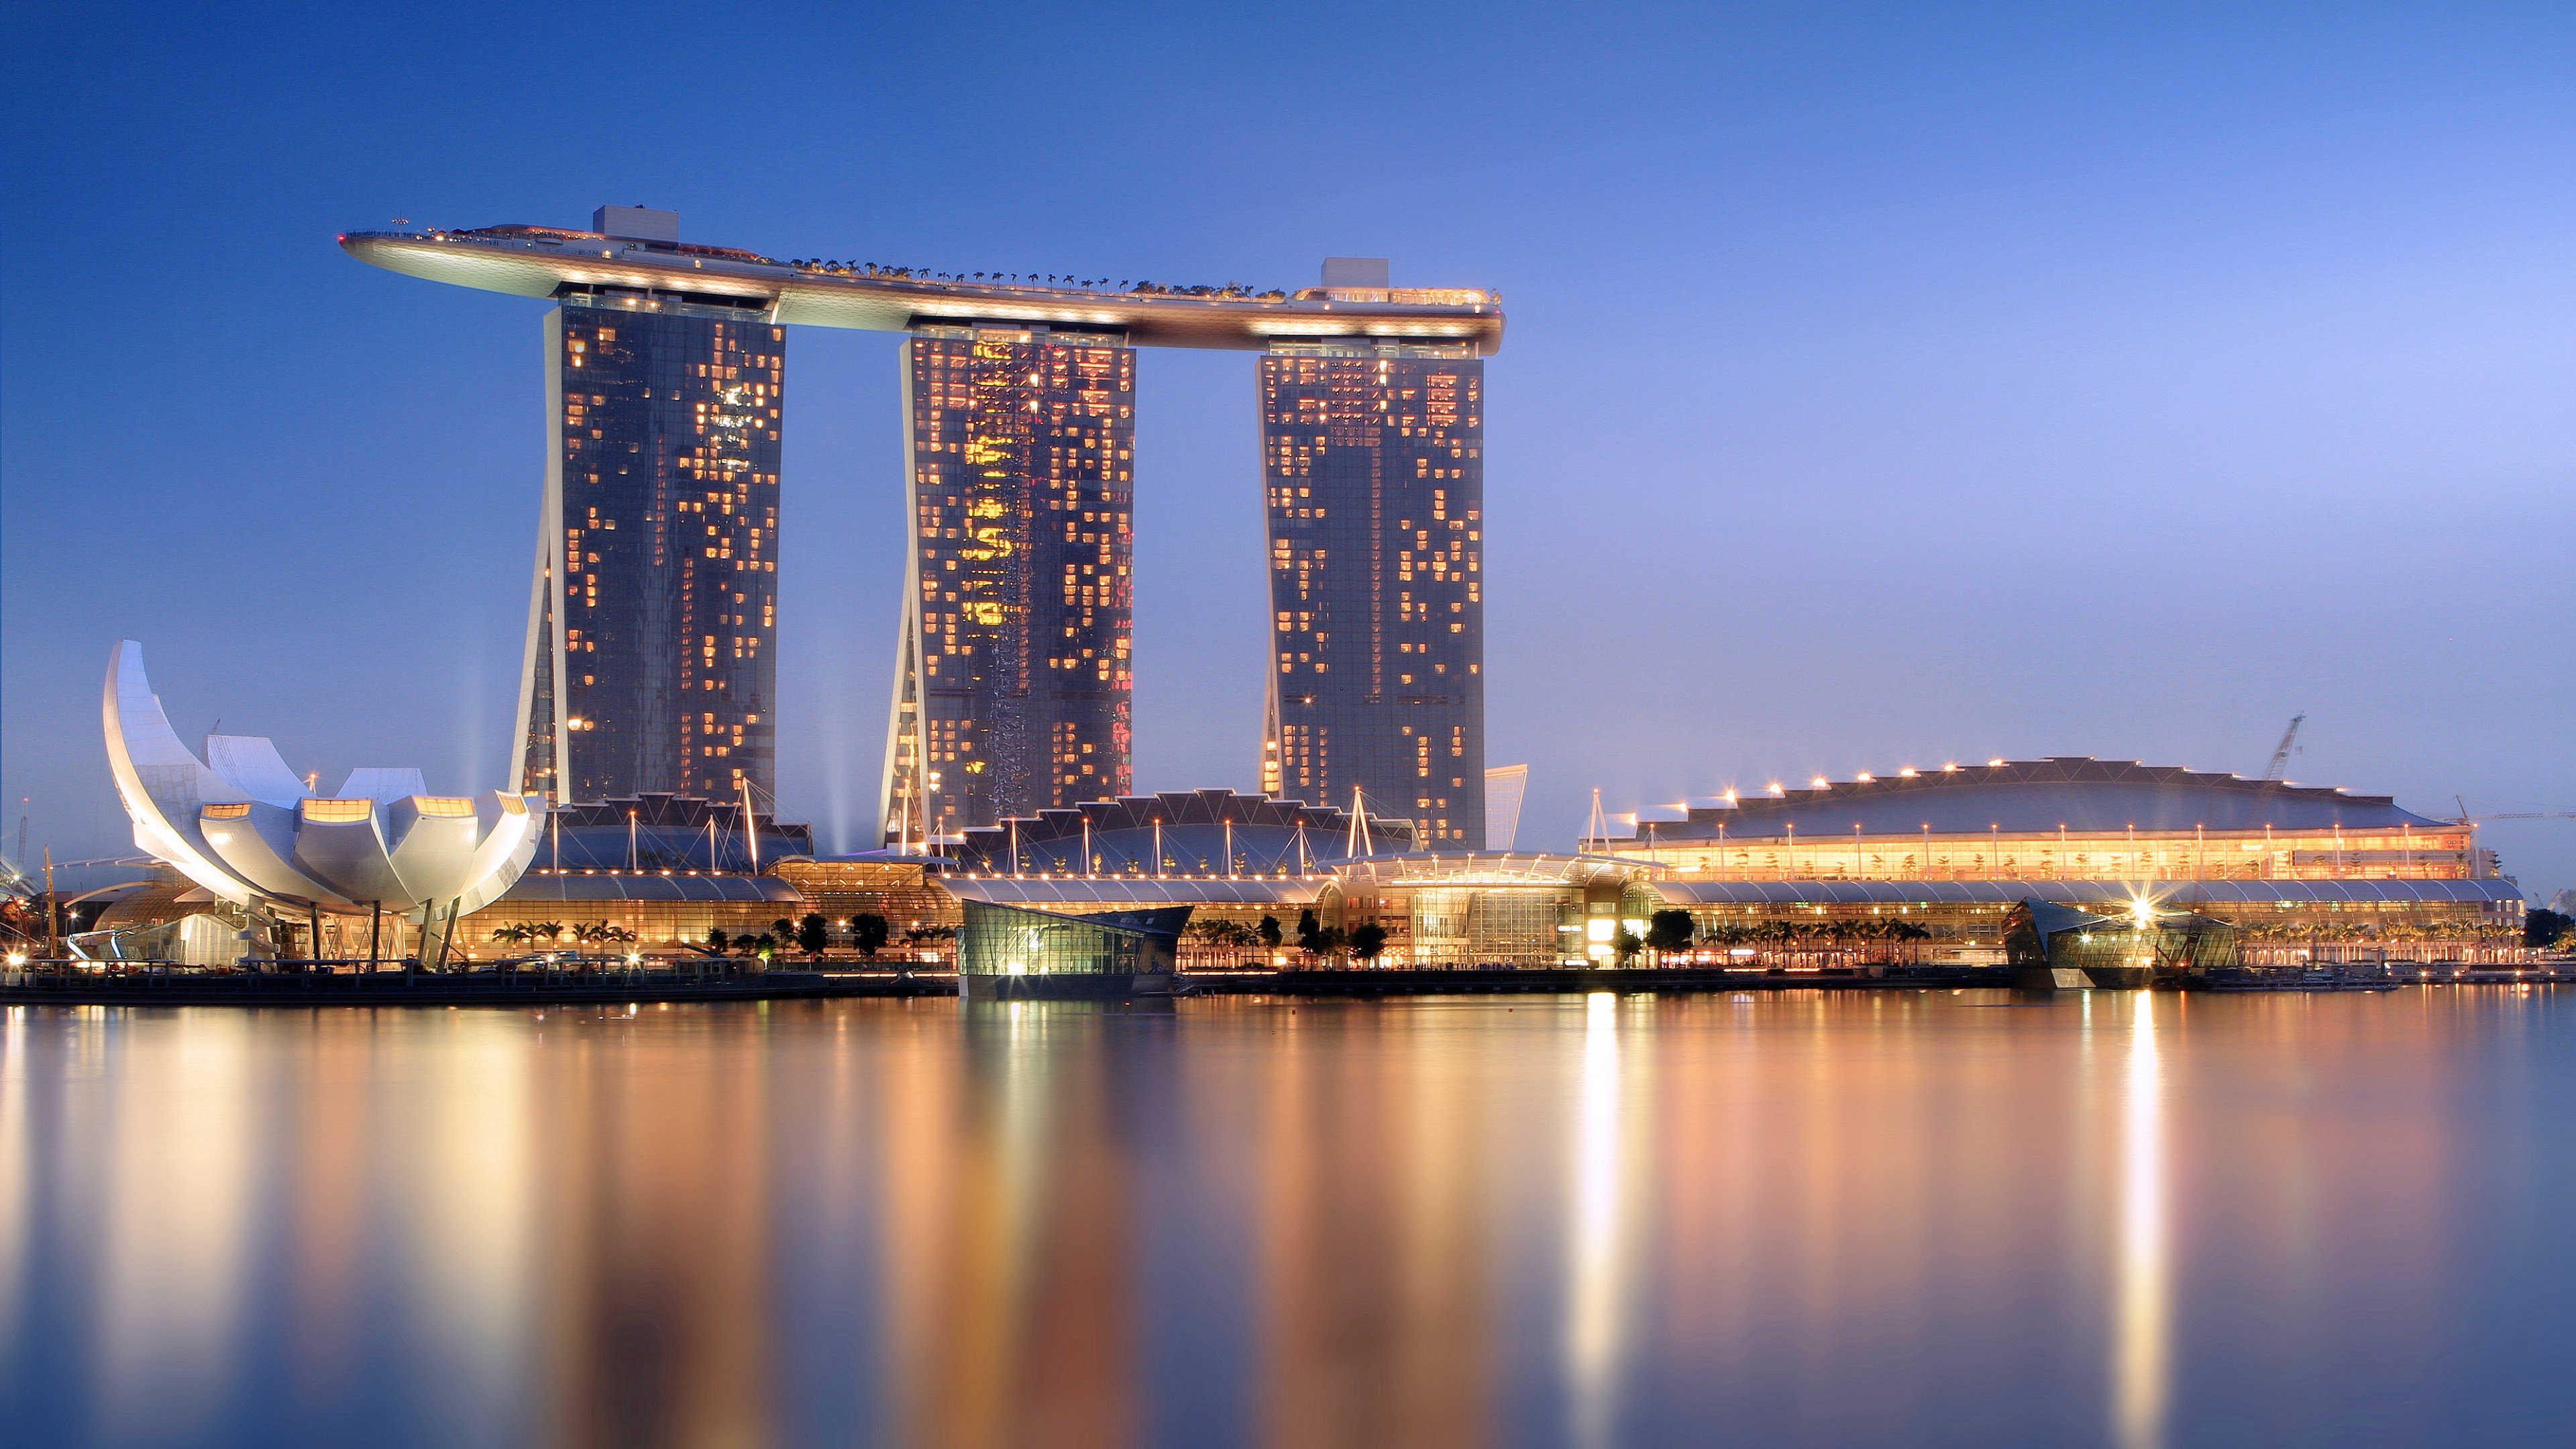 Fondos de pantalla Marina Bay Sands en Singapur